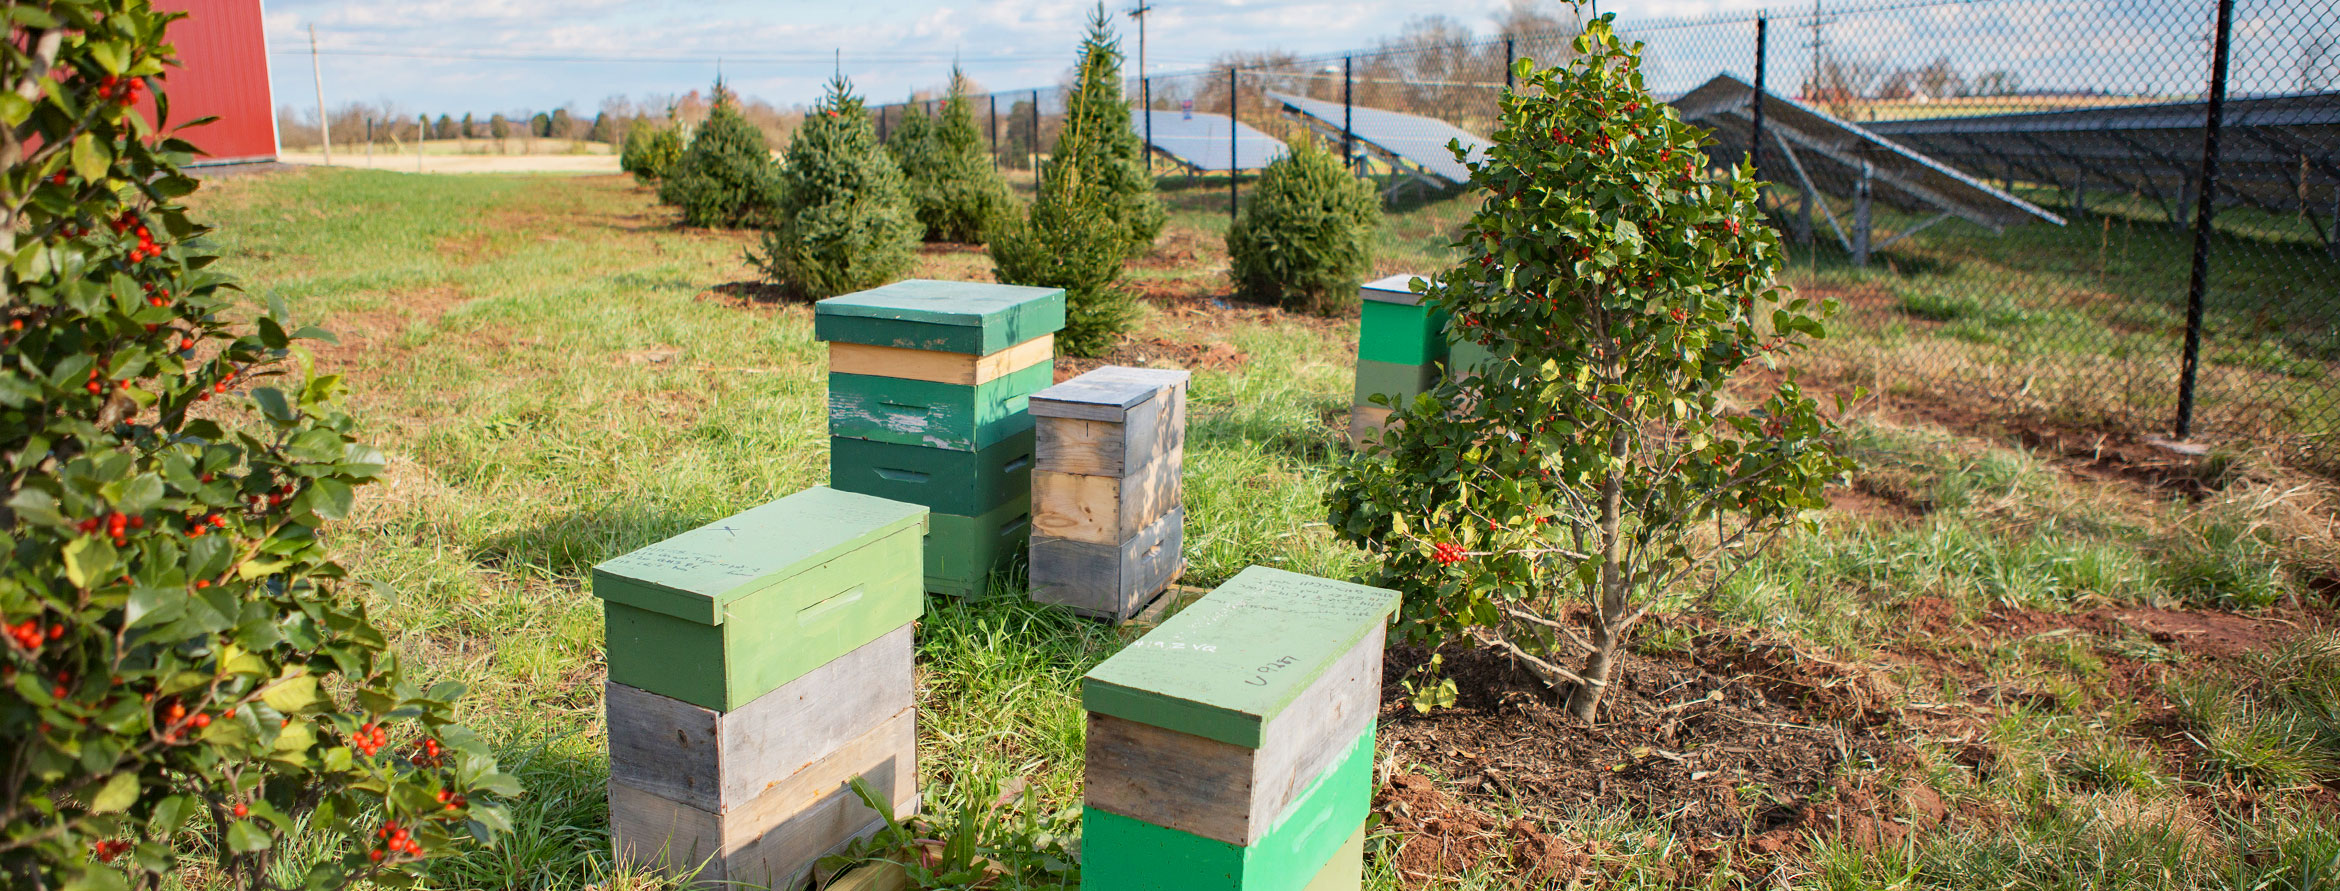 MD-Solar-Farm-Pollinator-Habitat-Bee-Boxes-Panels-H.jpg